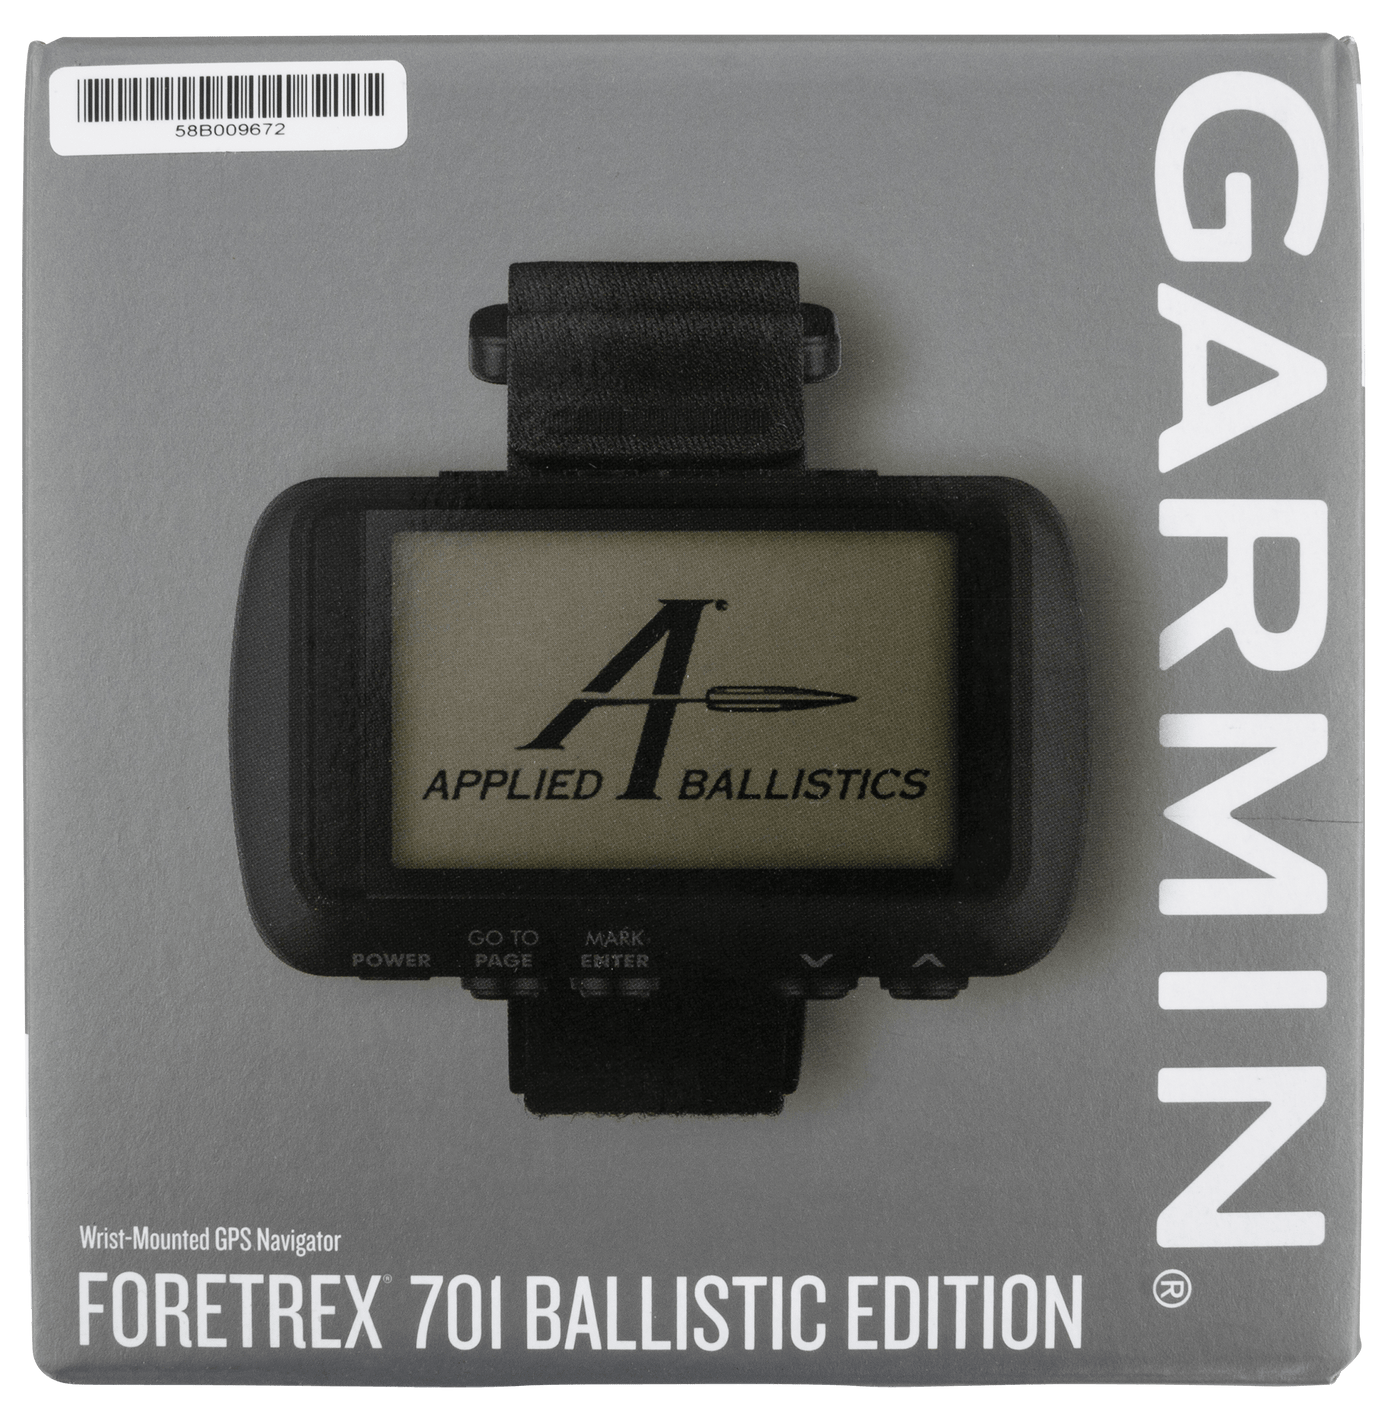 Garmin Garmin Foretrex, Garmin 0100177210 Foretrex 701 Ballistic Edition Accessories